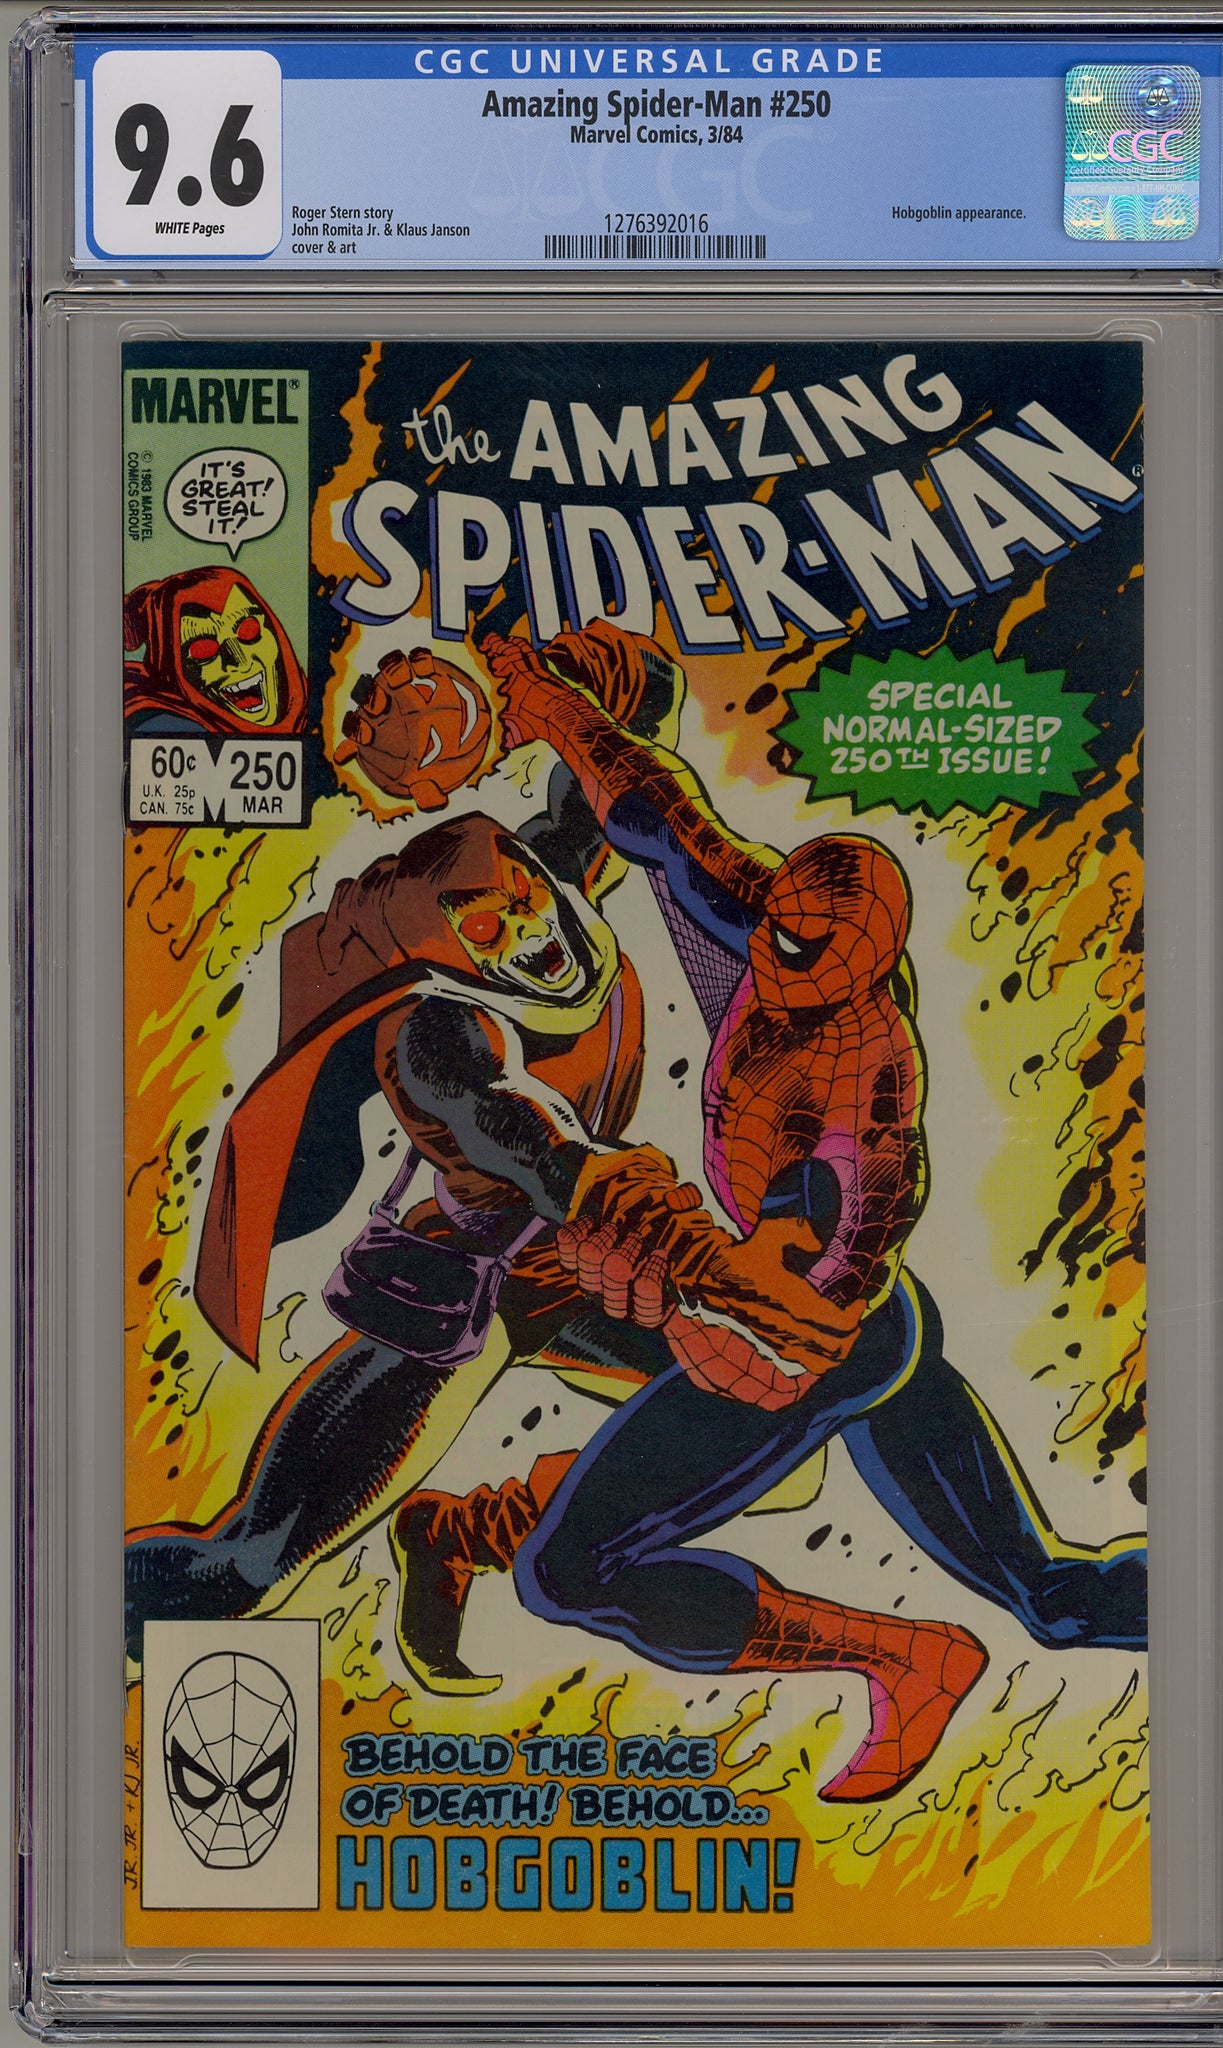 Amazing Spider-Man #250 (1984) Hobgoblin